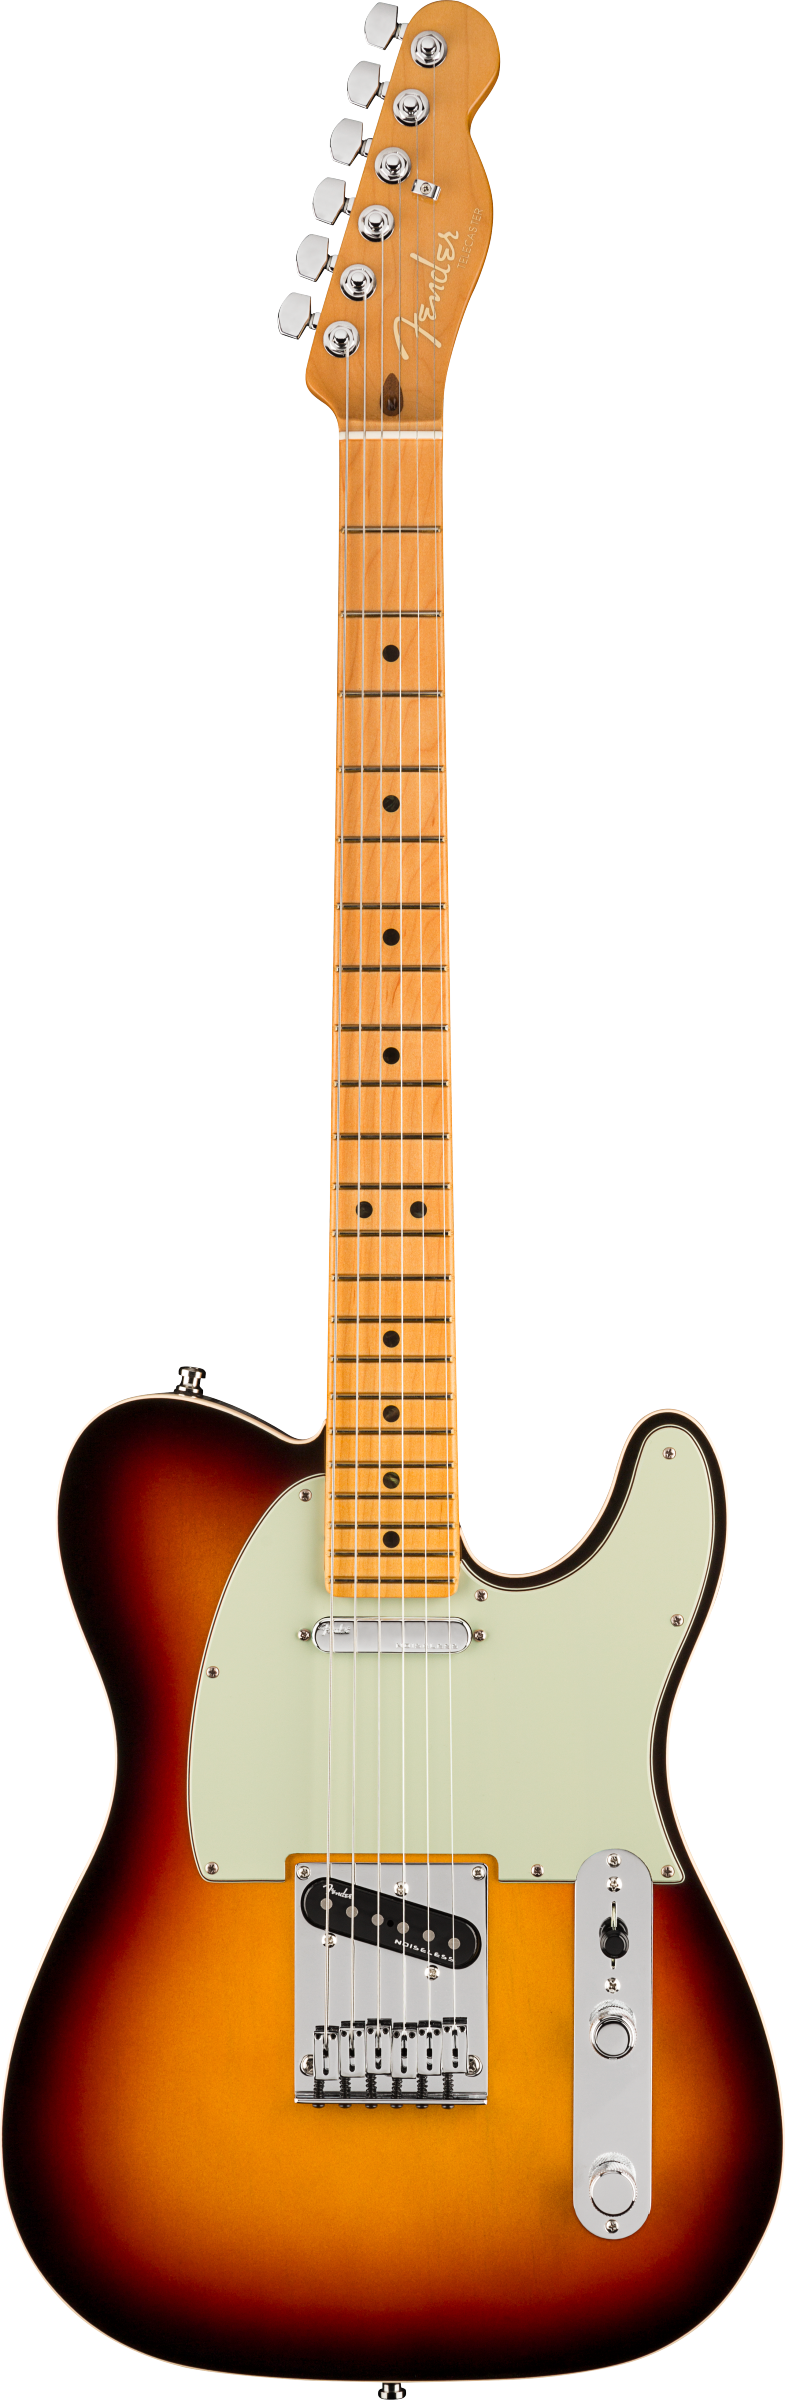 Fender Telecaster MP electric guitar in Ultraburst color Tone Shop Guitars Dallas